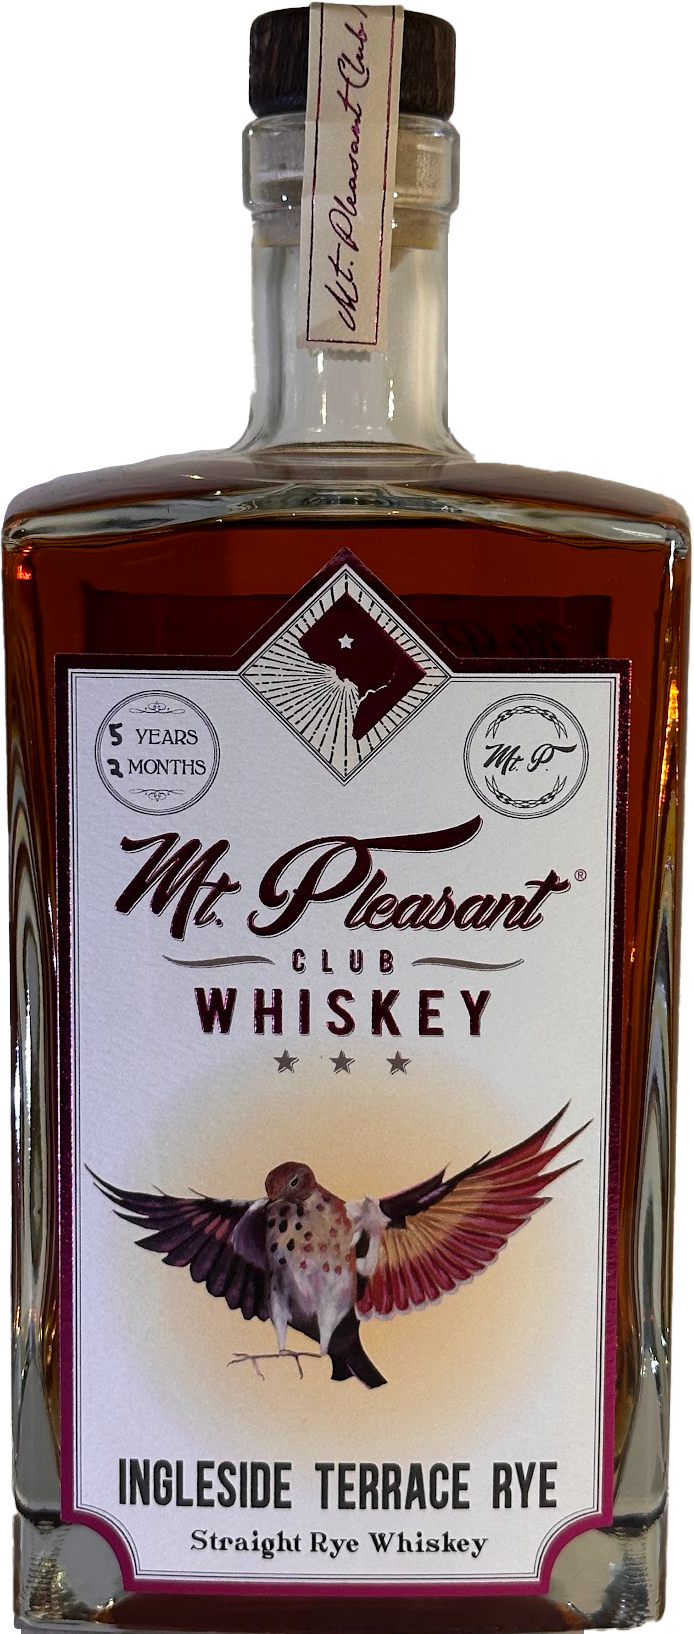 Mt. Pleasant Club Whiskey Ingleside Terrace Rye Whiskey